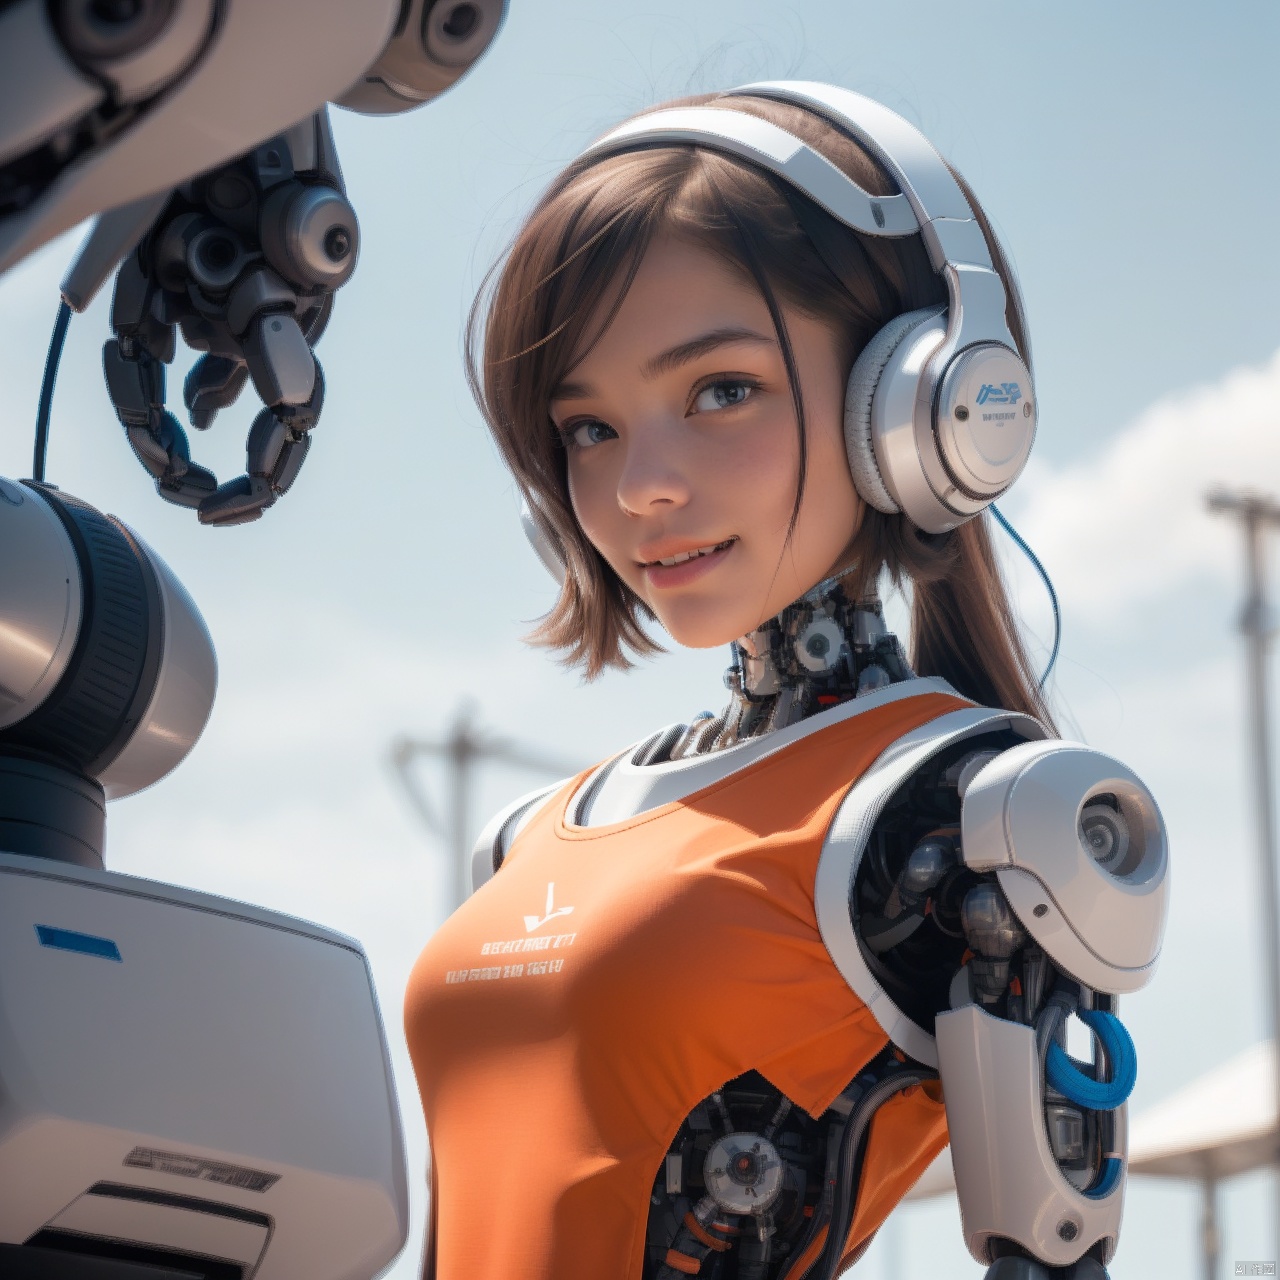  1girl,(A Robot:1.1),orange,Wearing headphones,Upper body, machinery,(smile:0.9),black_hair,